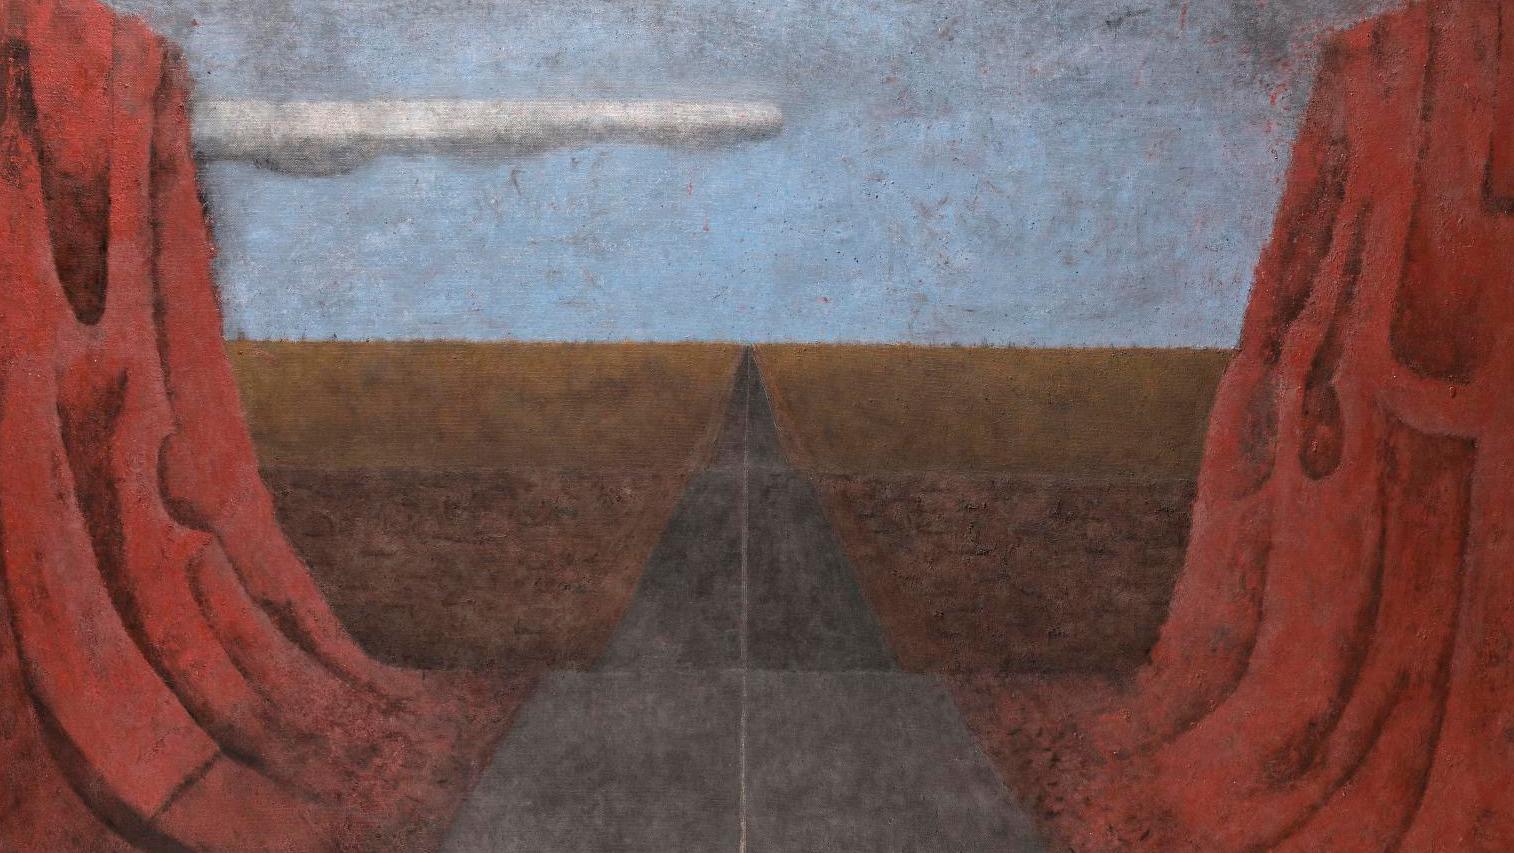 Rufino Tamayo (1899-1991), Camino al infinito, 1977, oil on canvas, 130 x 195 cm/51... Rufino Tamayo, the Mexican Painter Passing through Paris